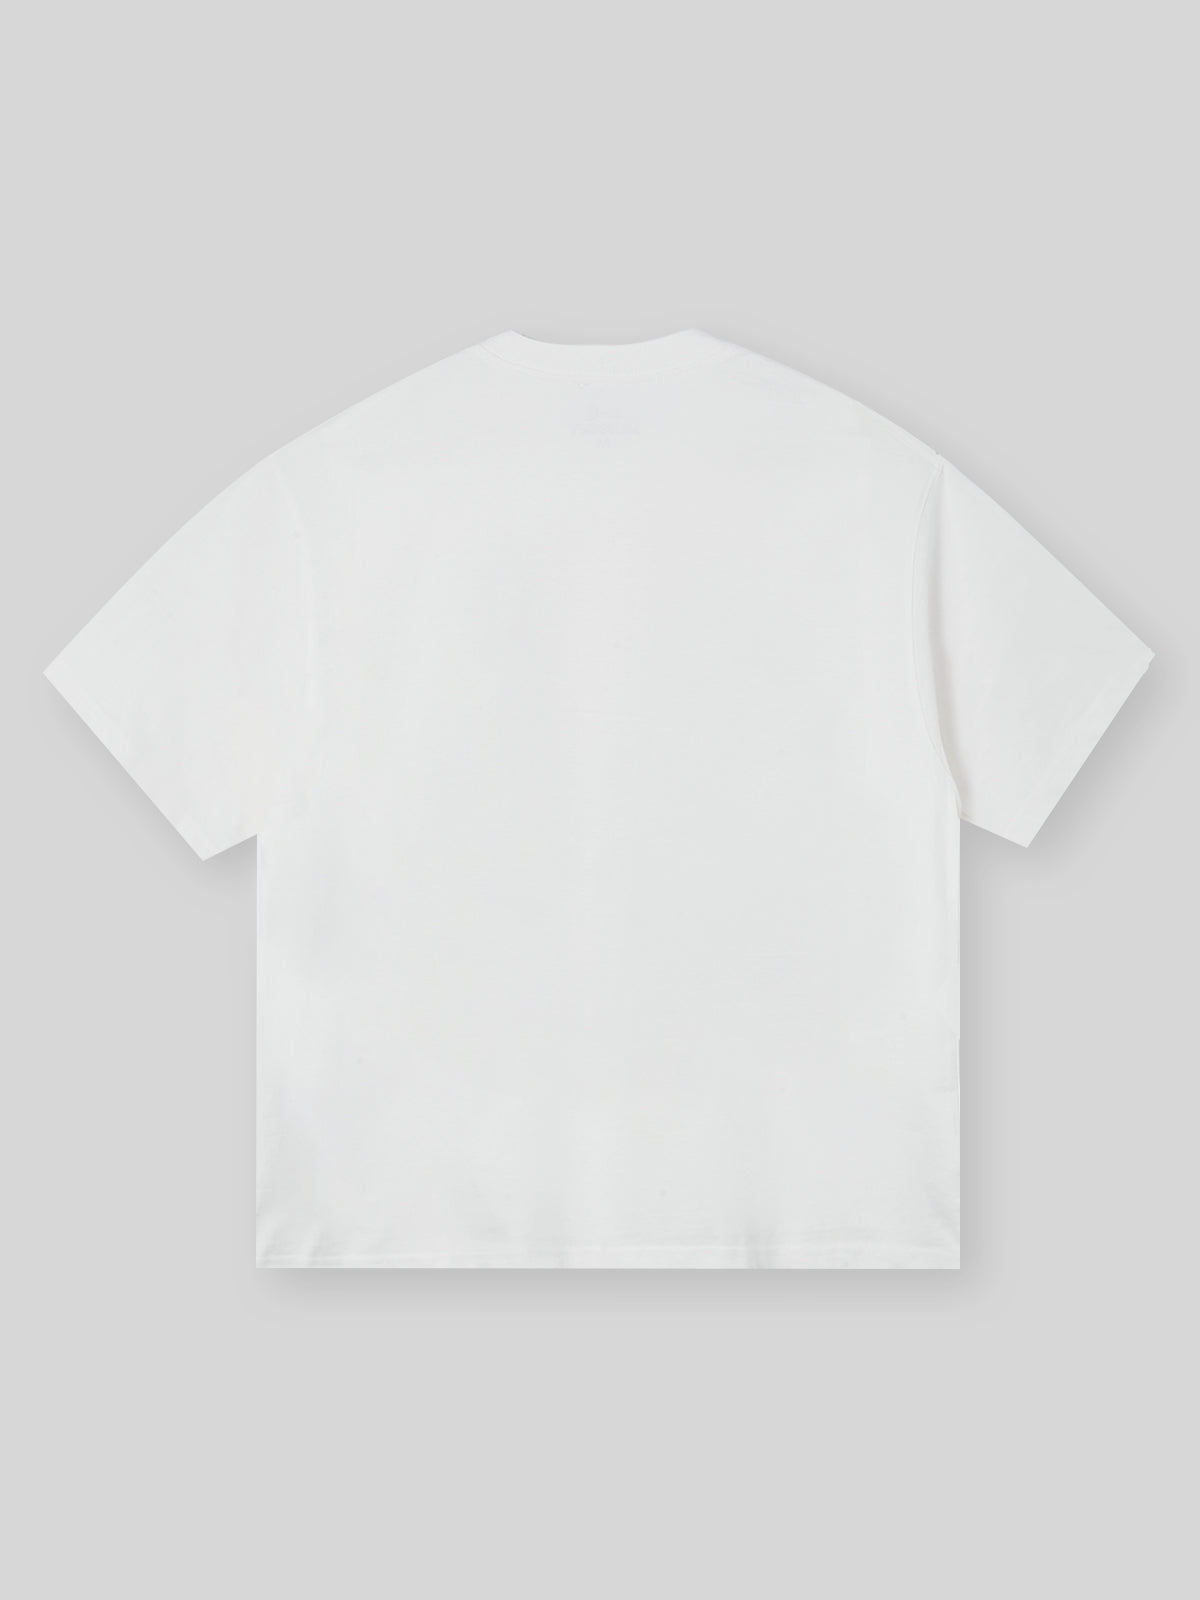 BOUNCE BACK© Blurred Male Portrait Print T-Shirt